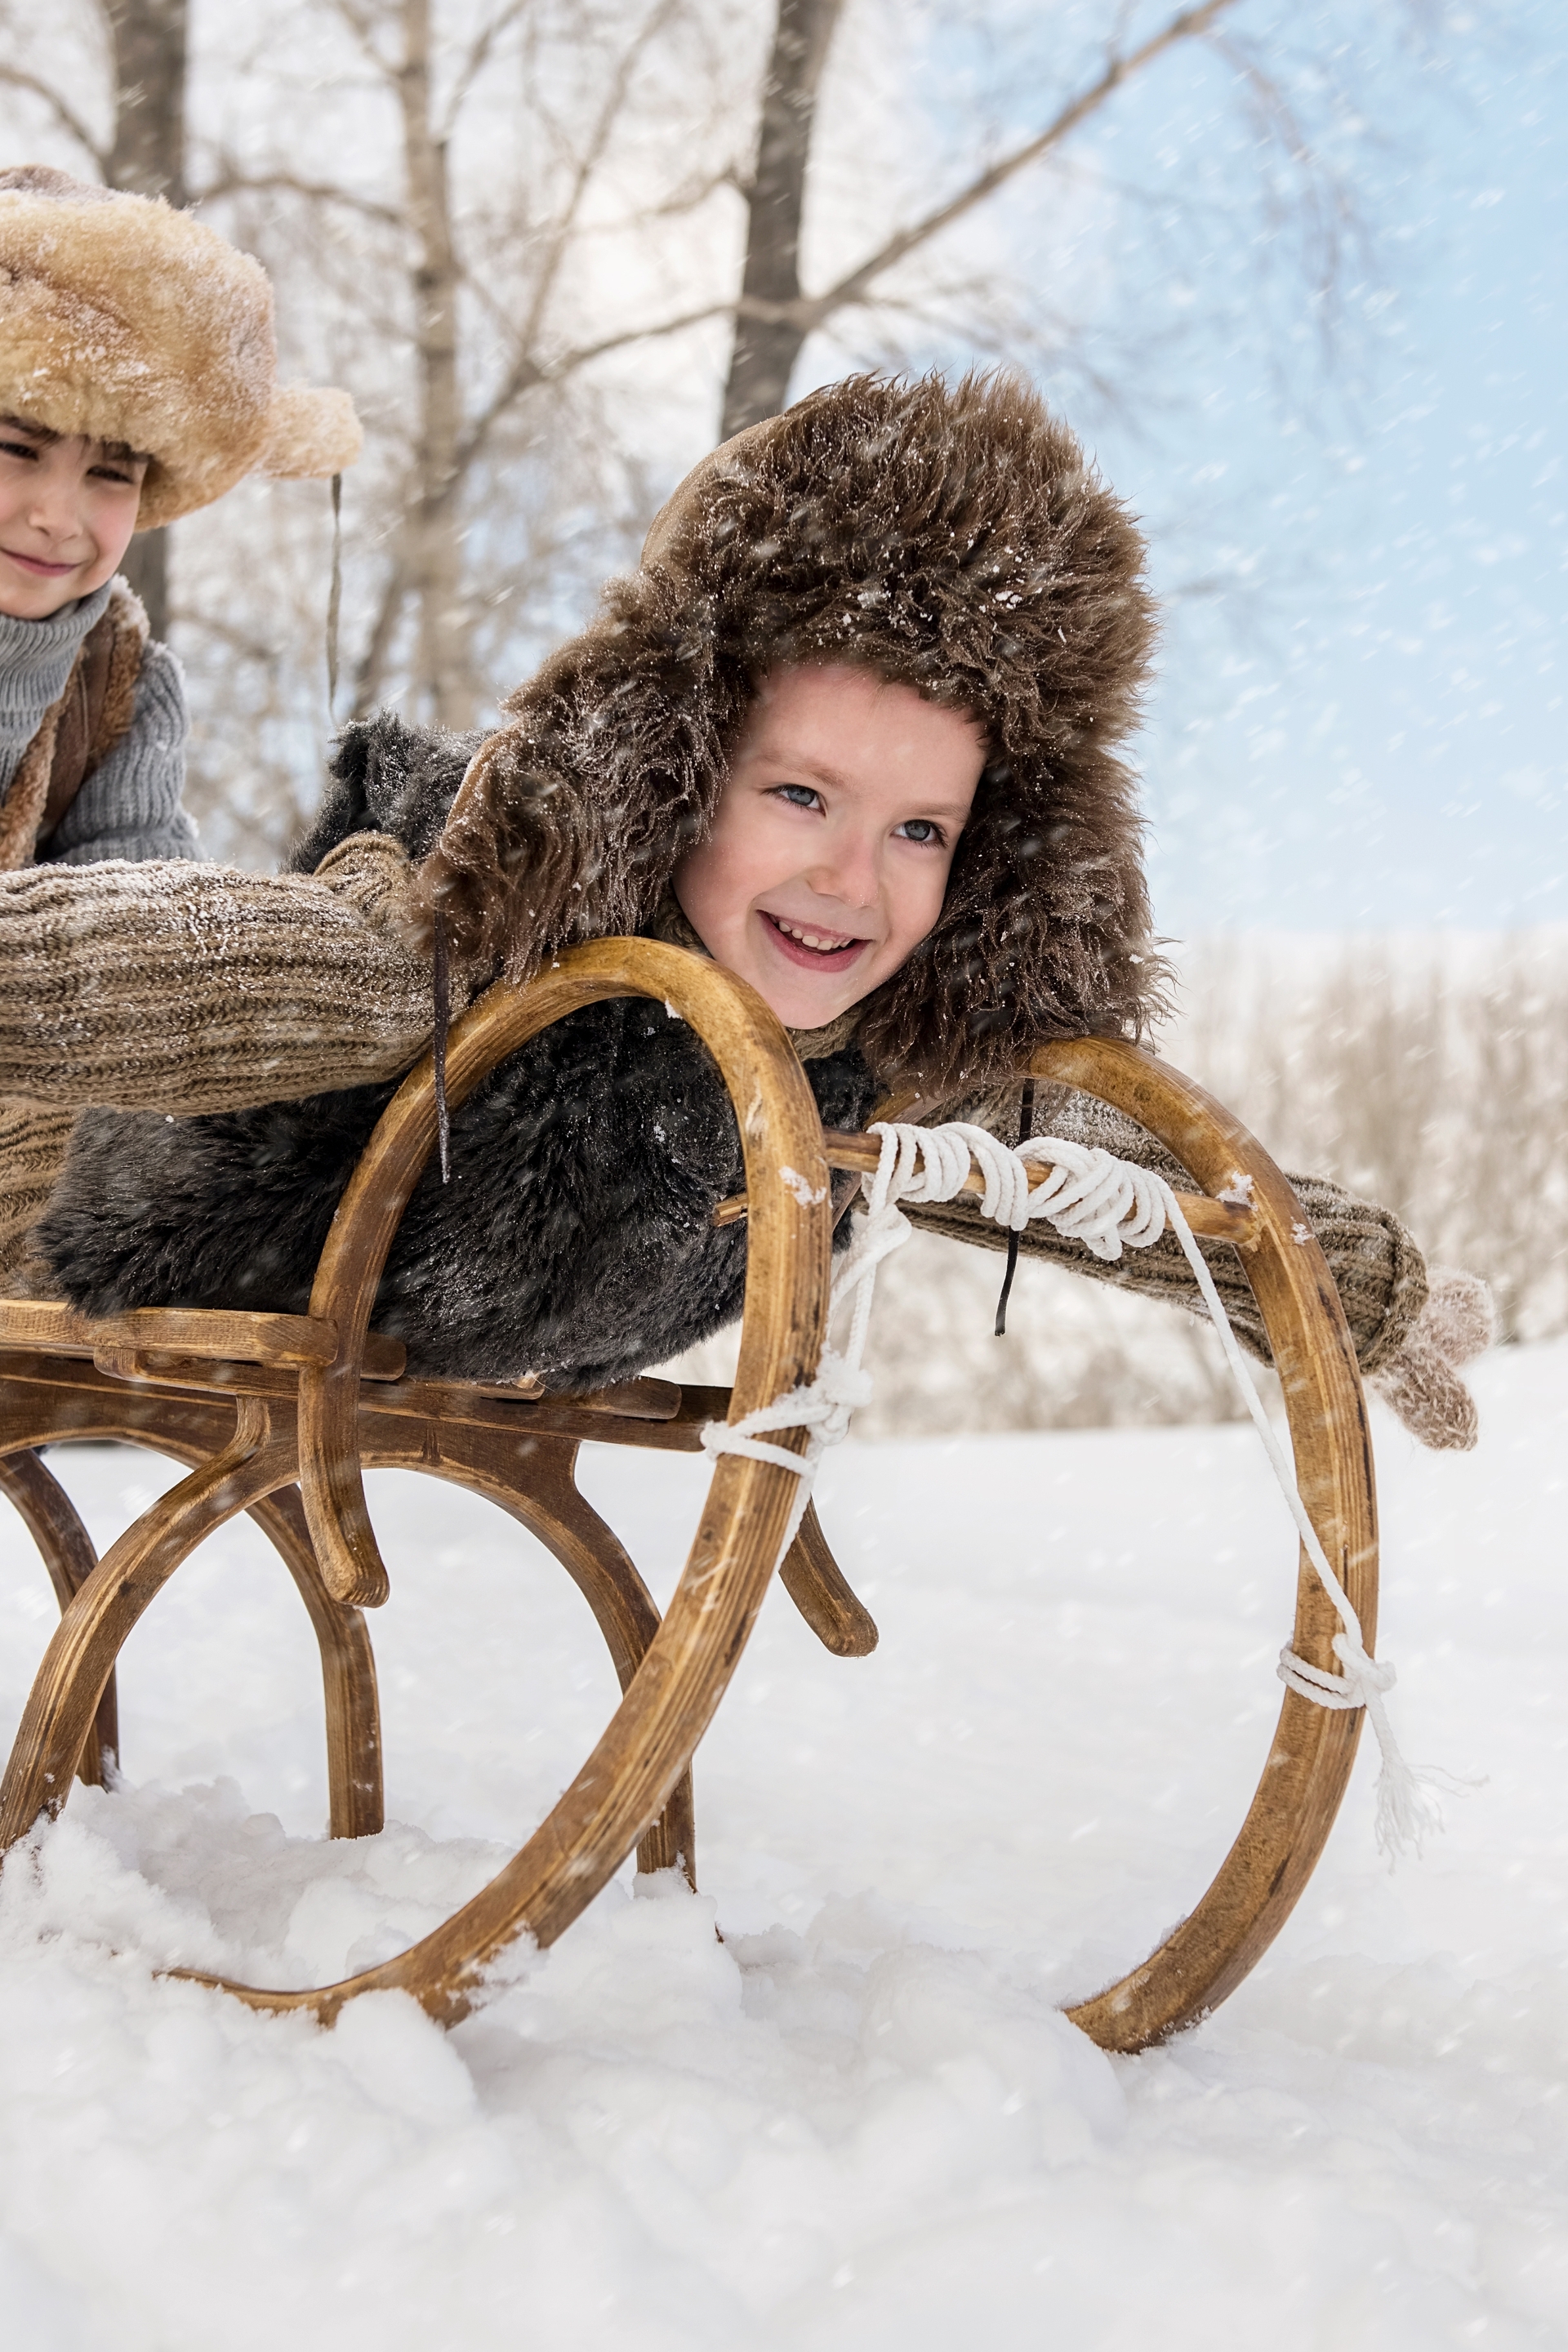 Image: Boys, children, hat, winter, snow, ride, sled, trees, smile, mood